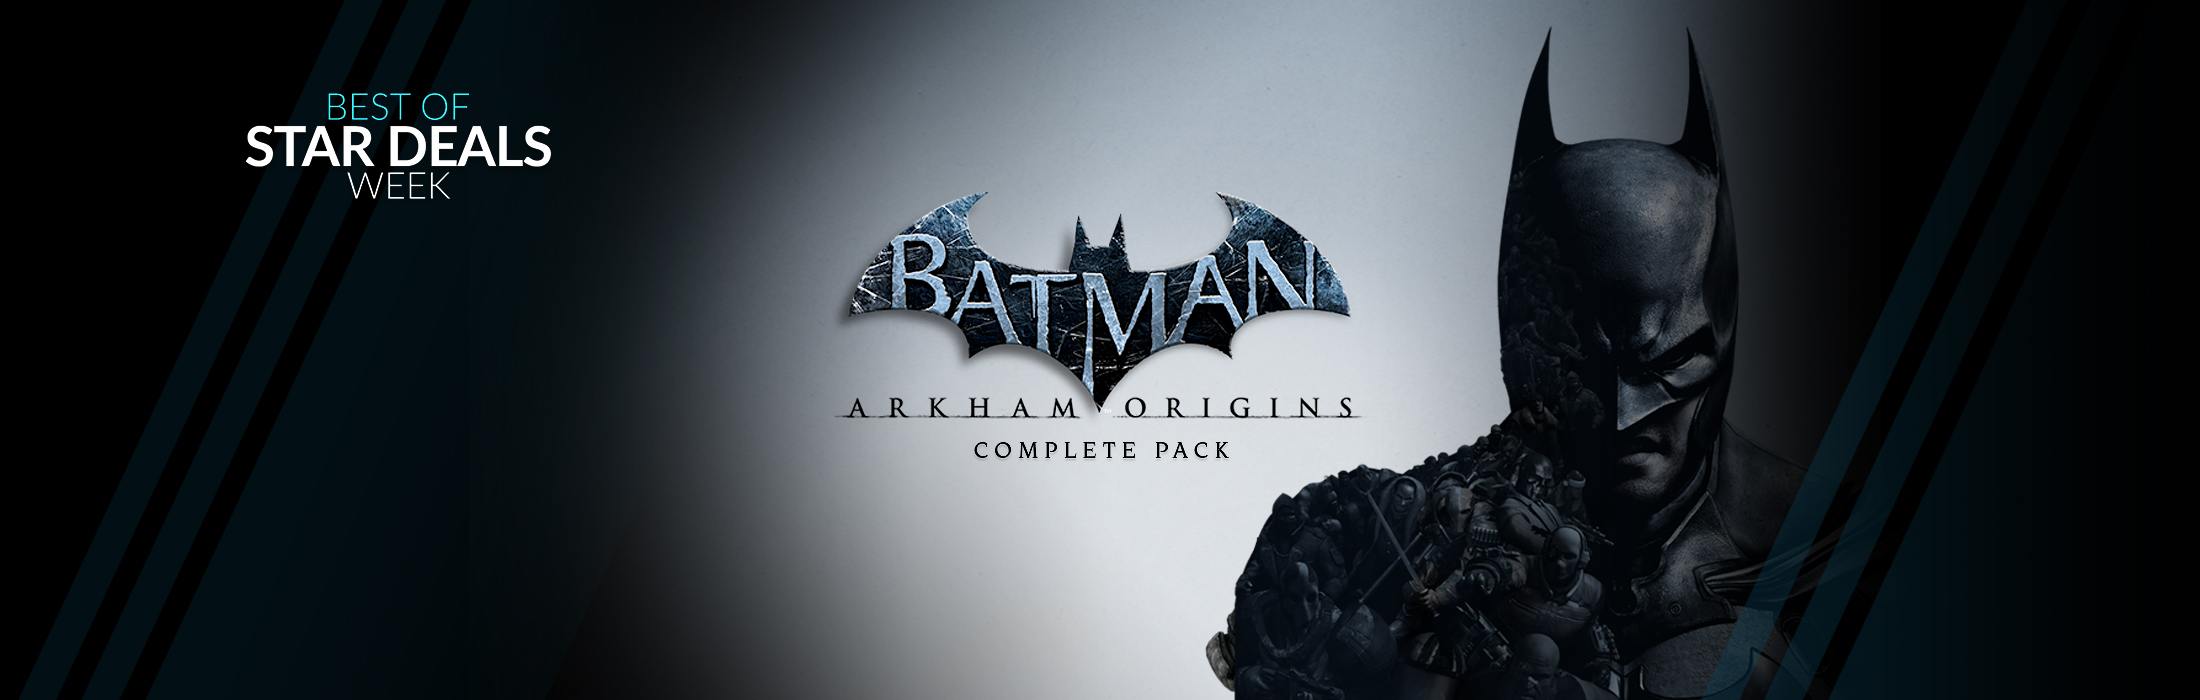 Batman: Arkham Origins Complete Pack [Mínimo]